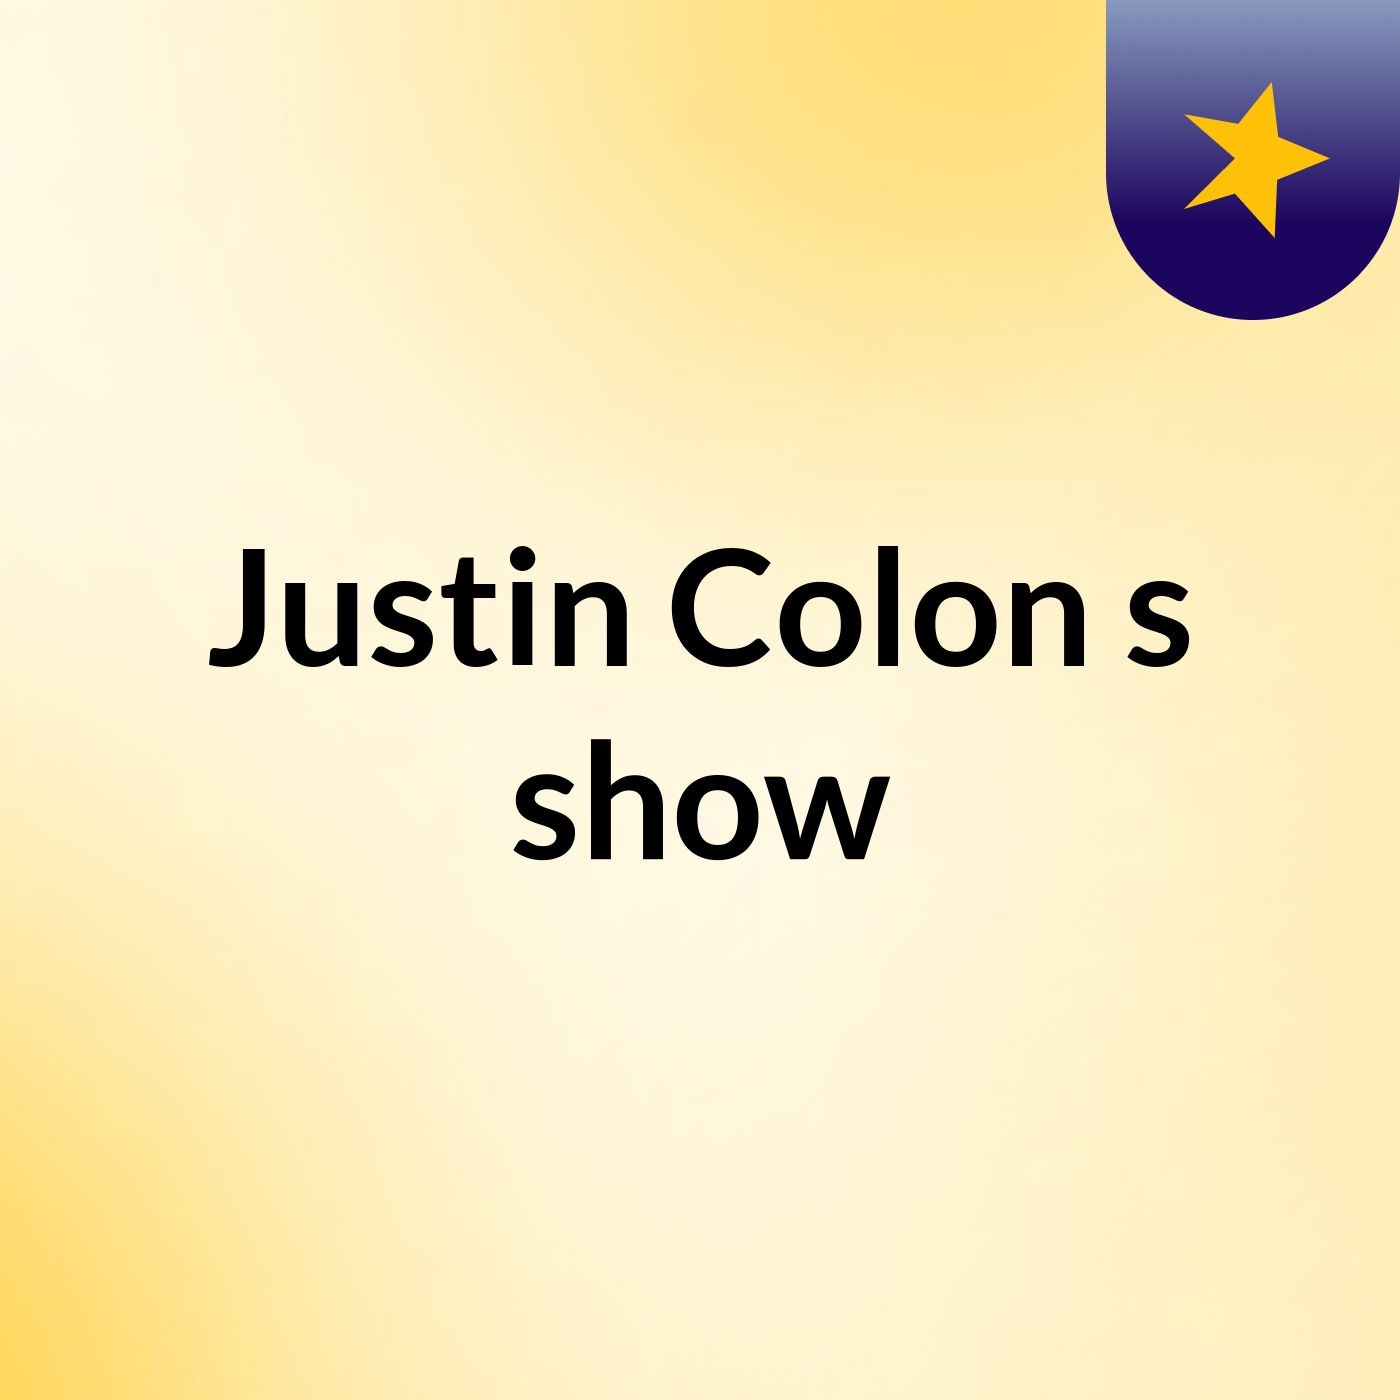 Episode 1 - Justin Colon's show